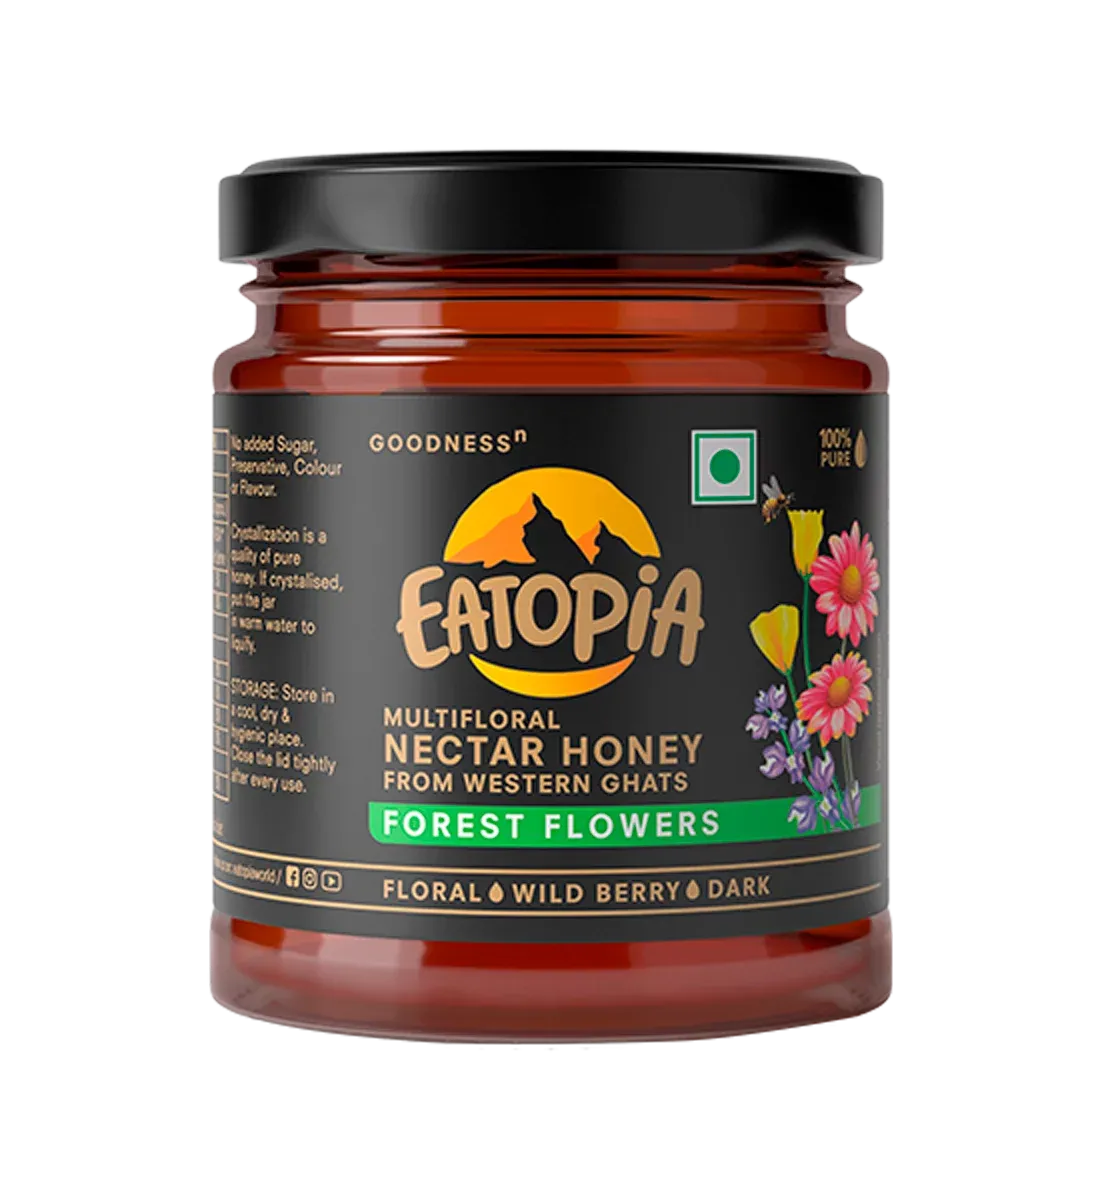 Eatopia Forest Flowers Honey Image